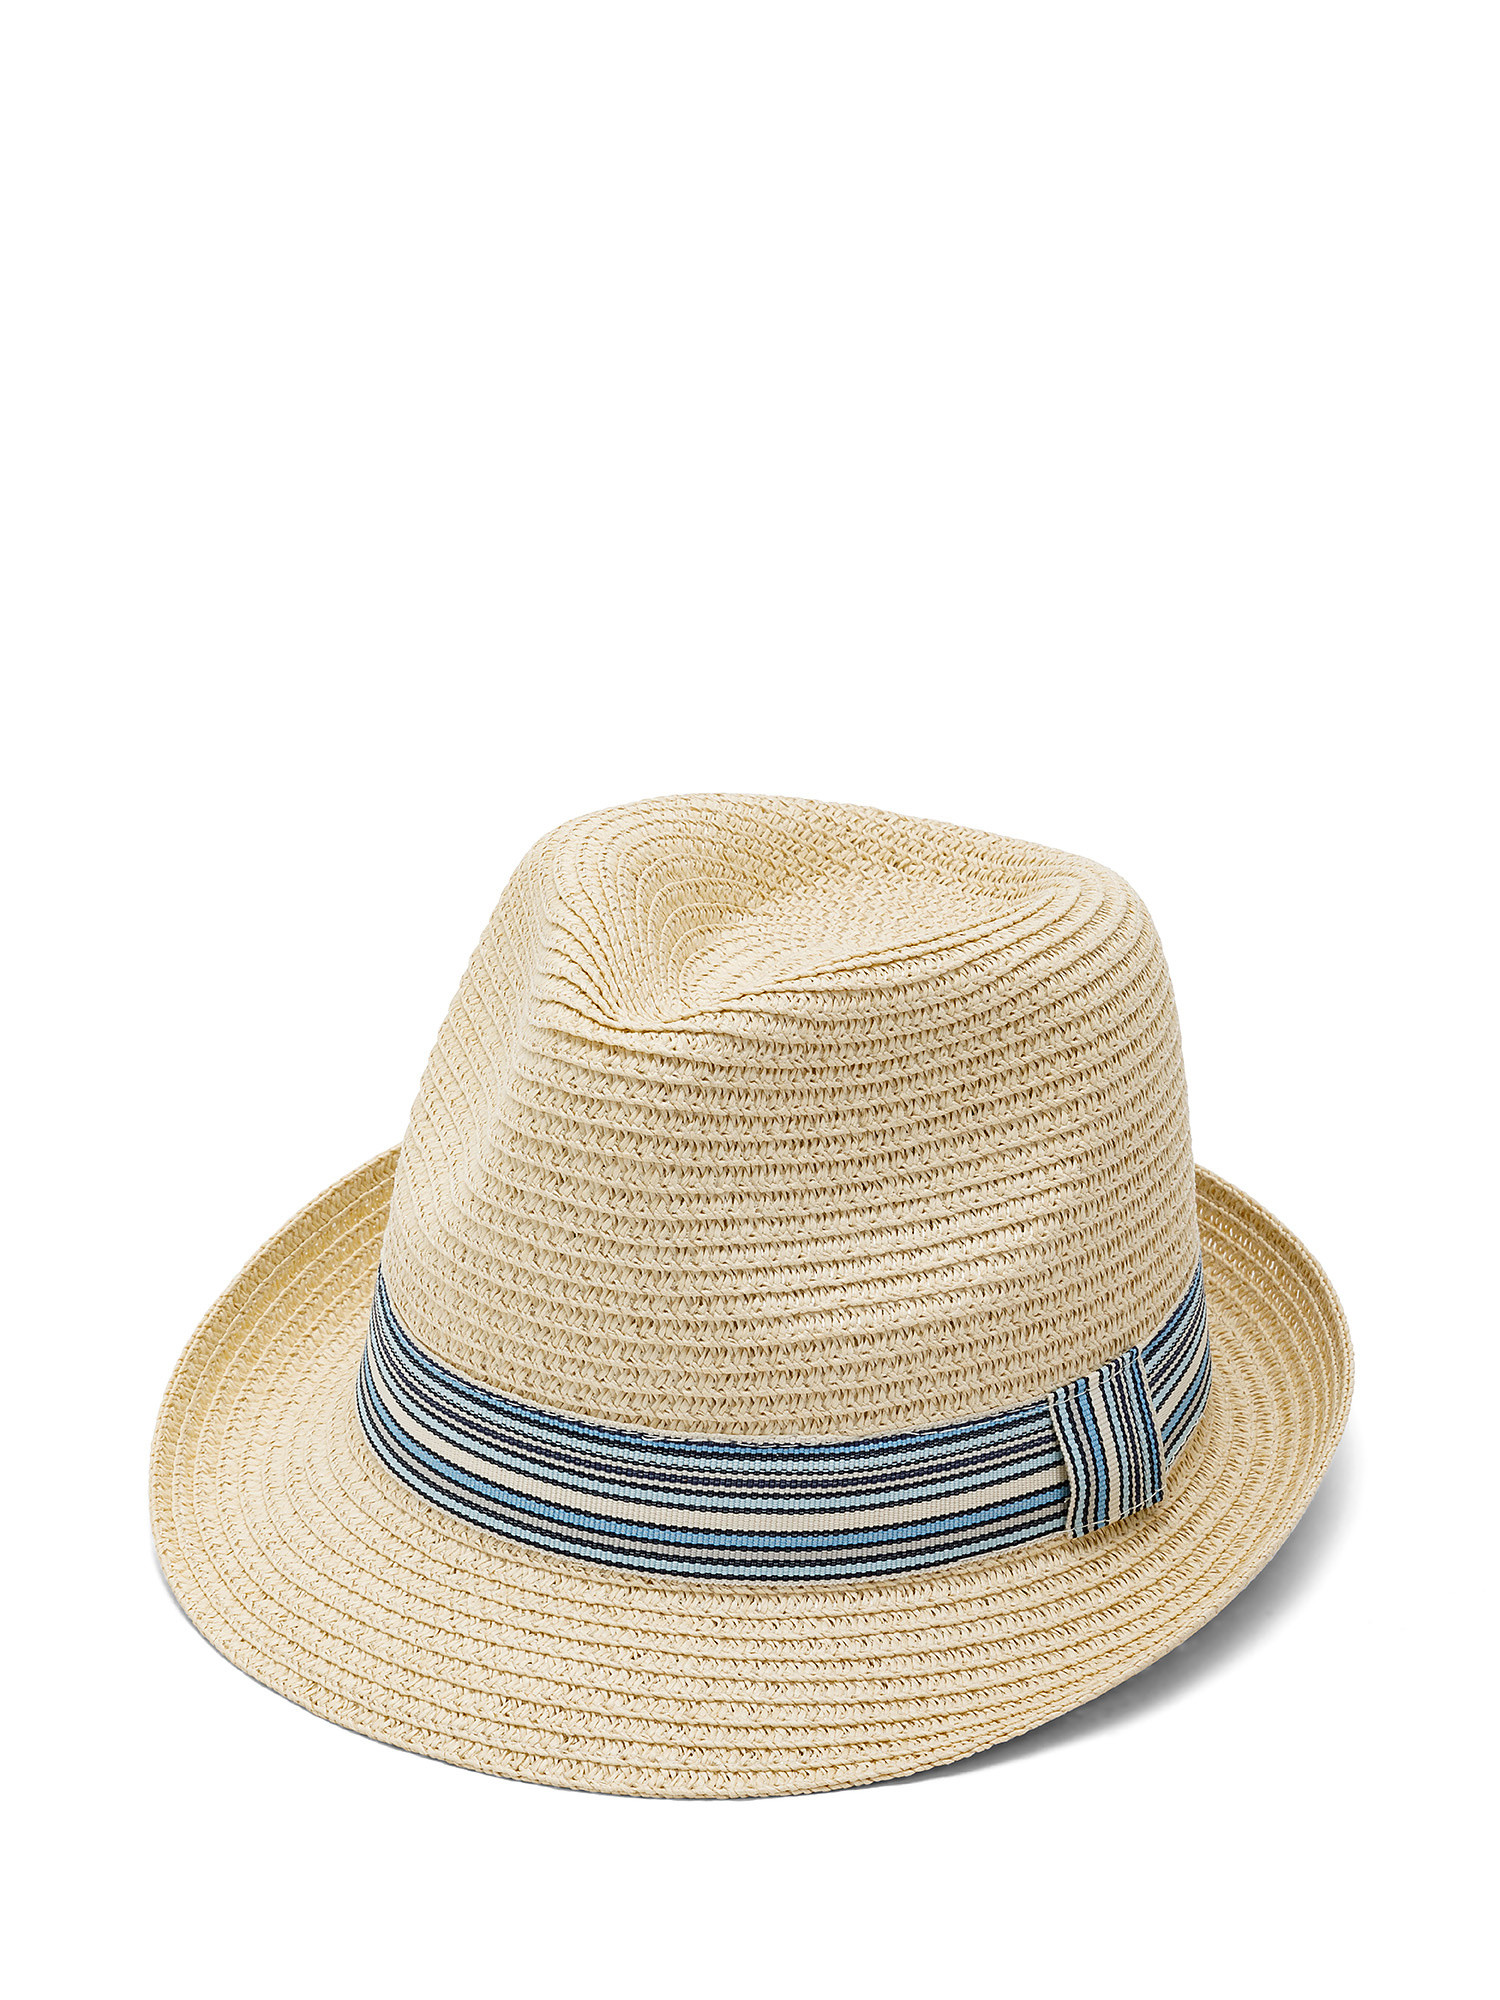 Luca D'Altieri - Alpine hat with ribbon, Beige, large image number 0